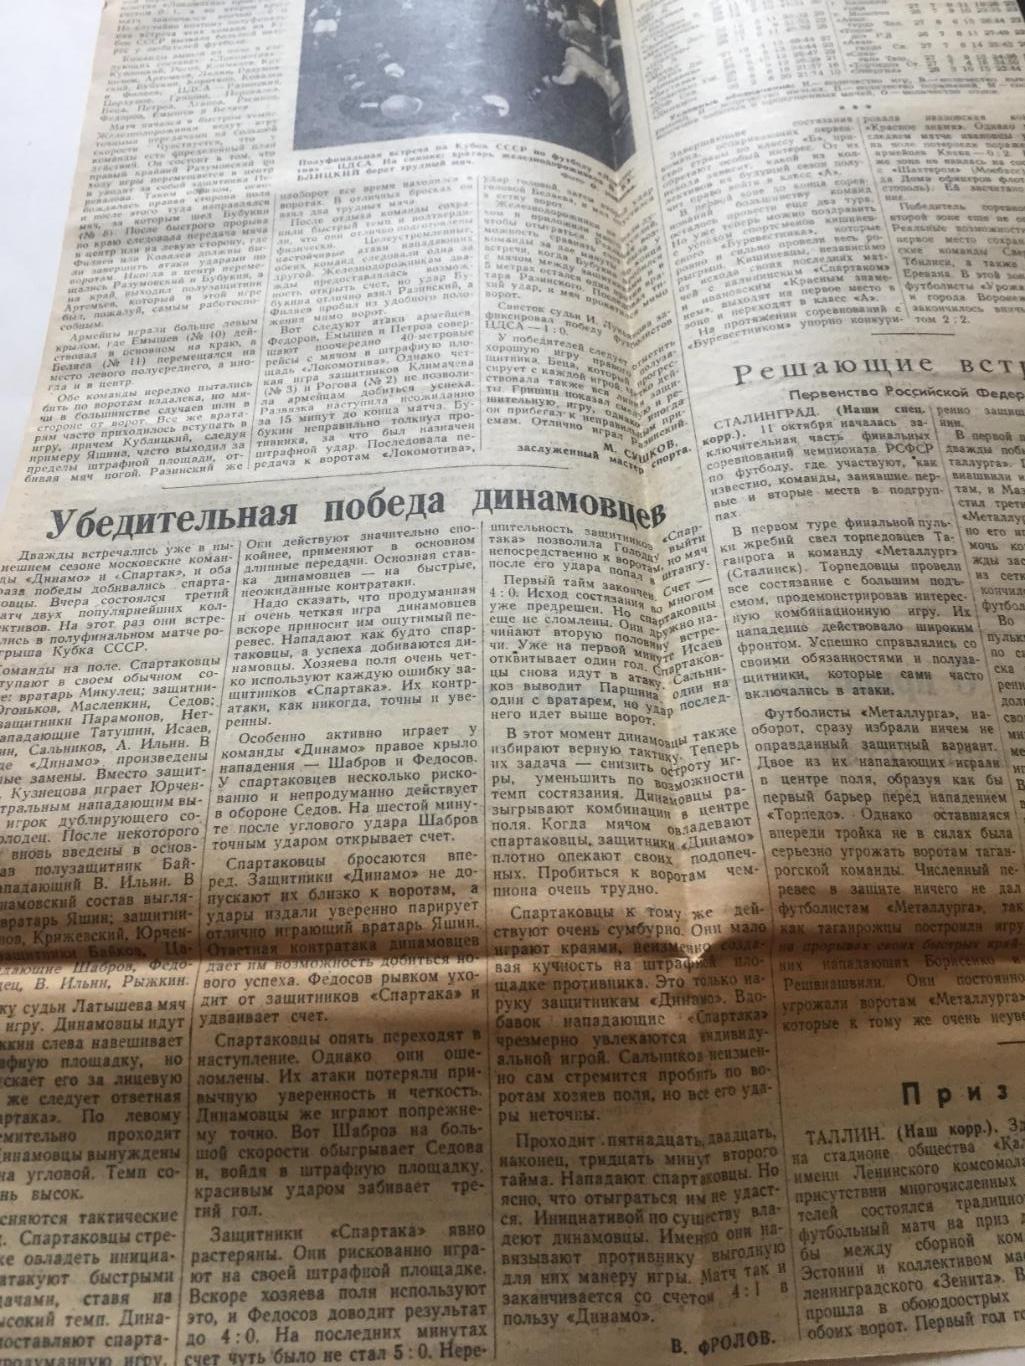 Кубок СССР ЦДСА -Локомотив Москва,Динамо-Спартак Москва 1955